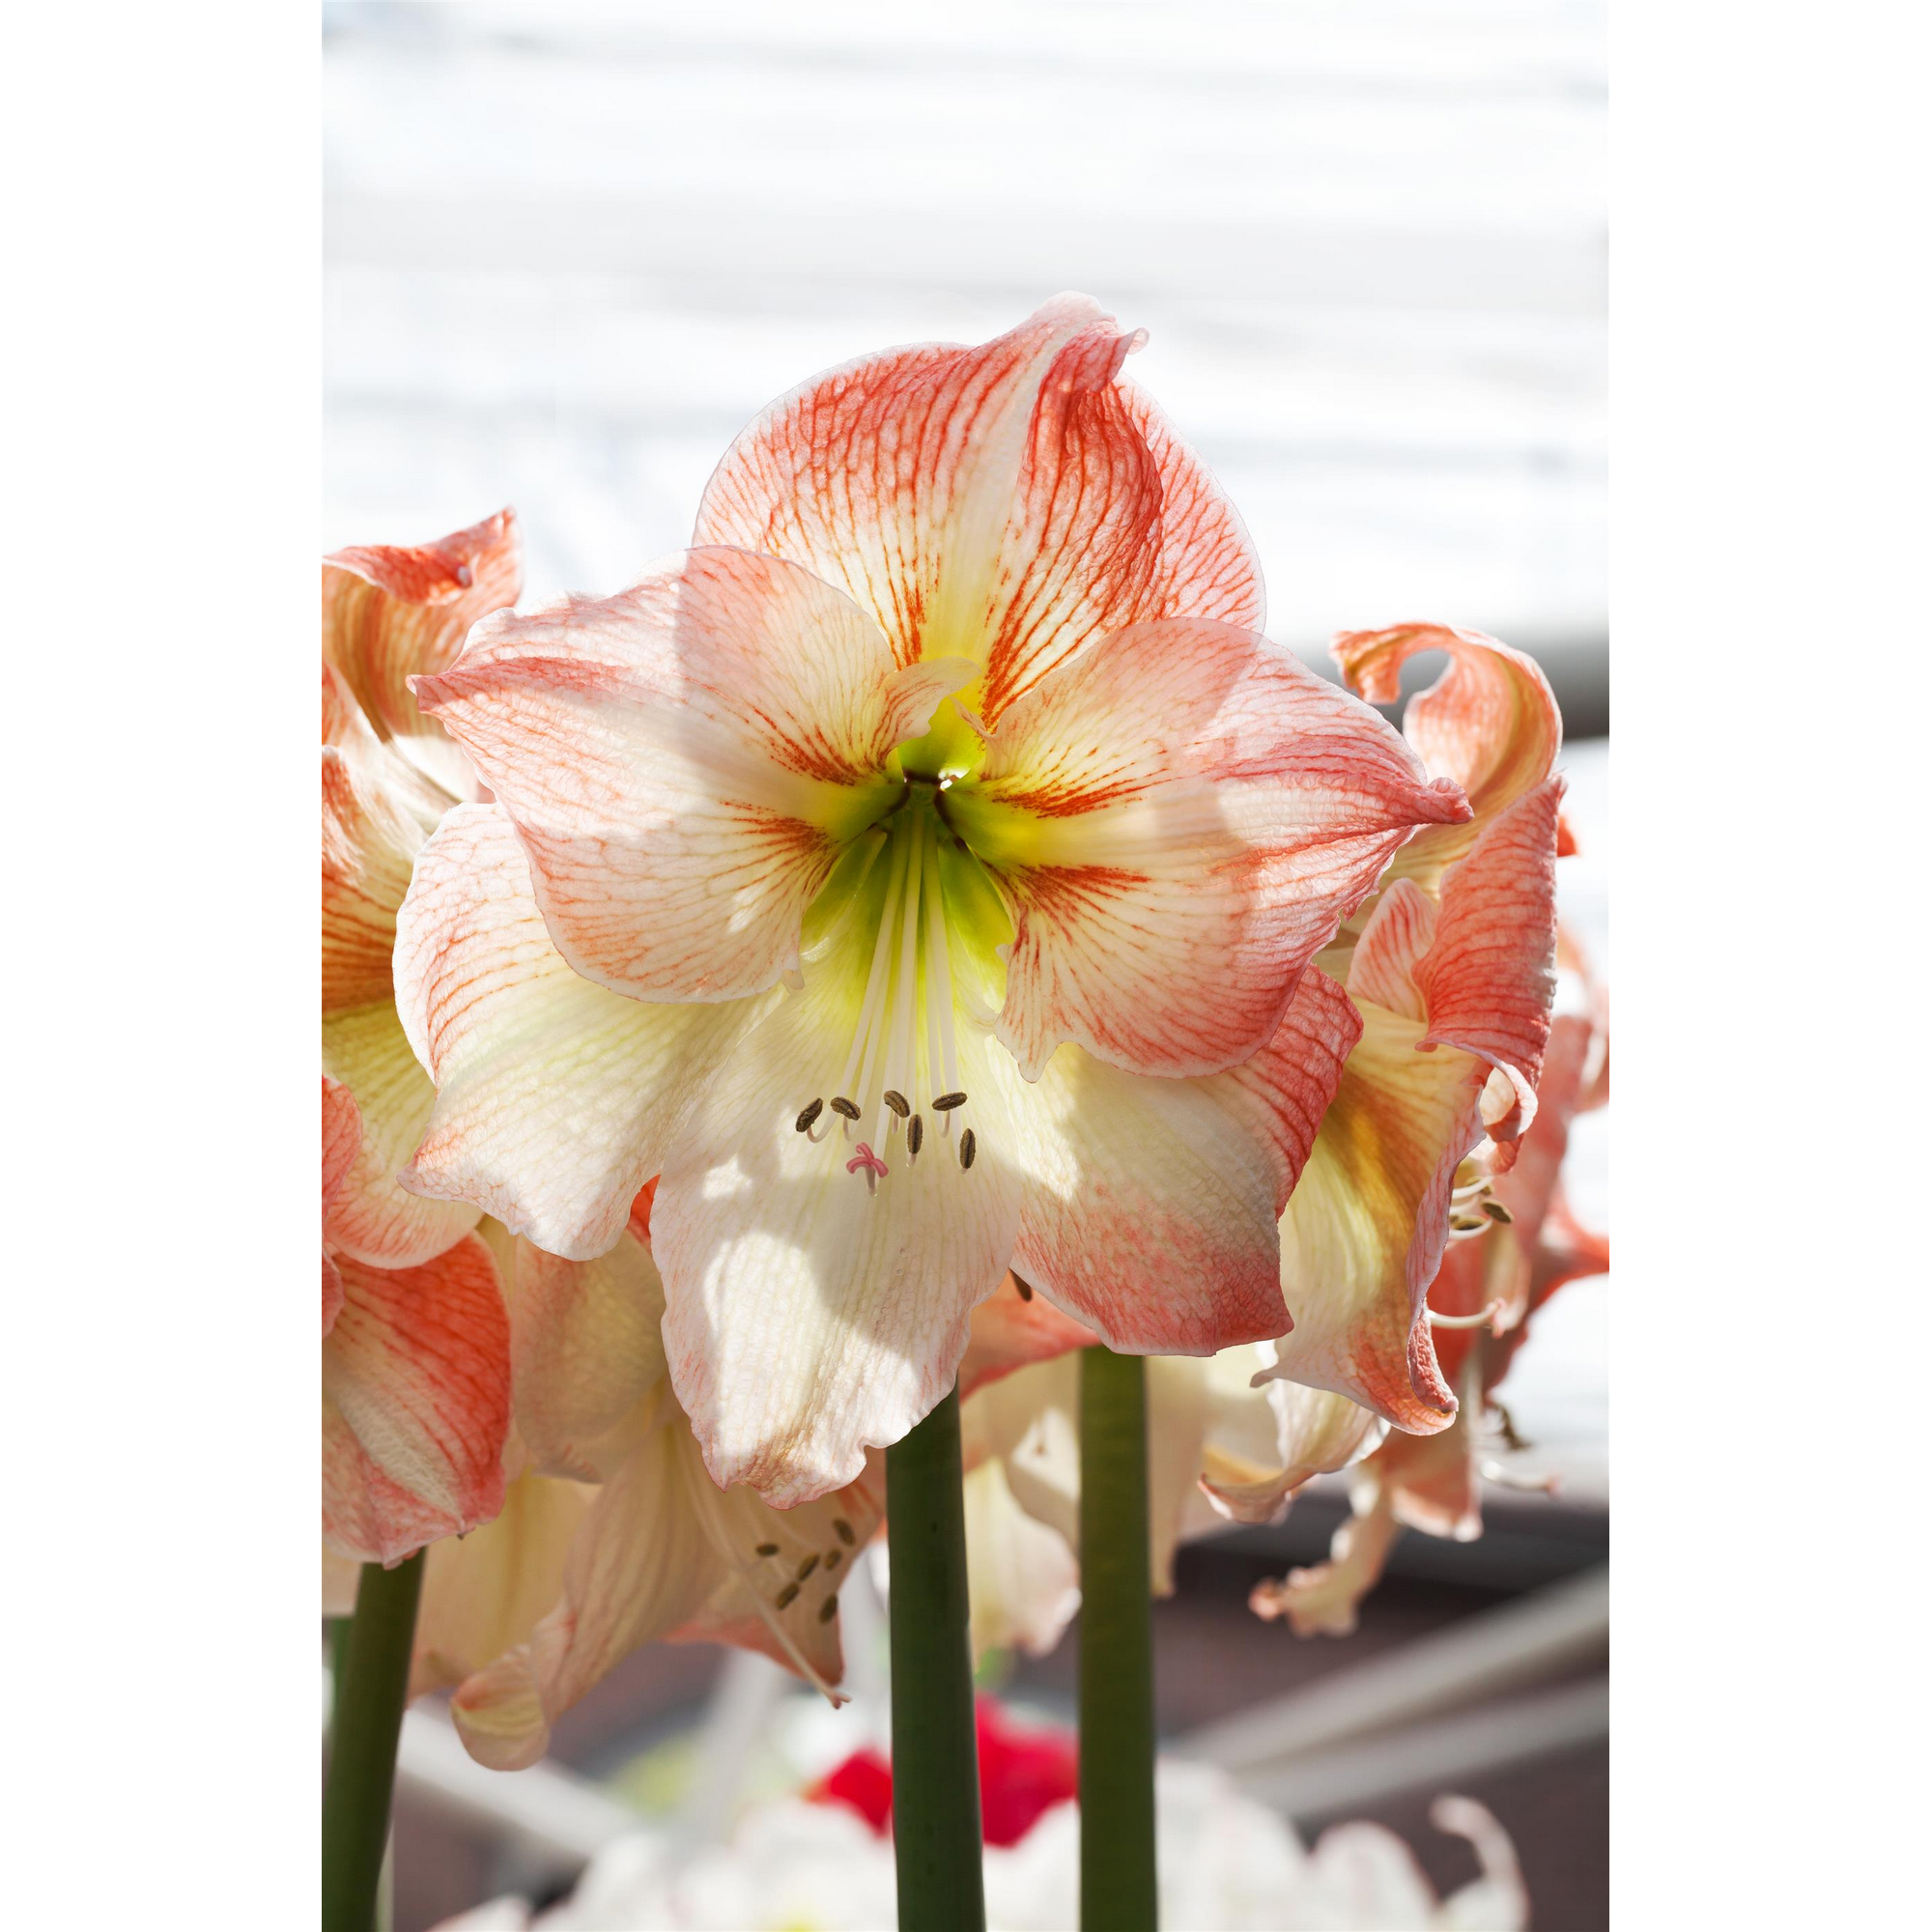 Amaryllis weiß-pink 12 cm Topf, 2er-Set + product picture